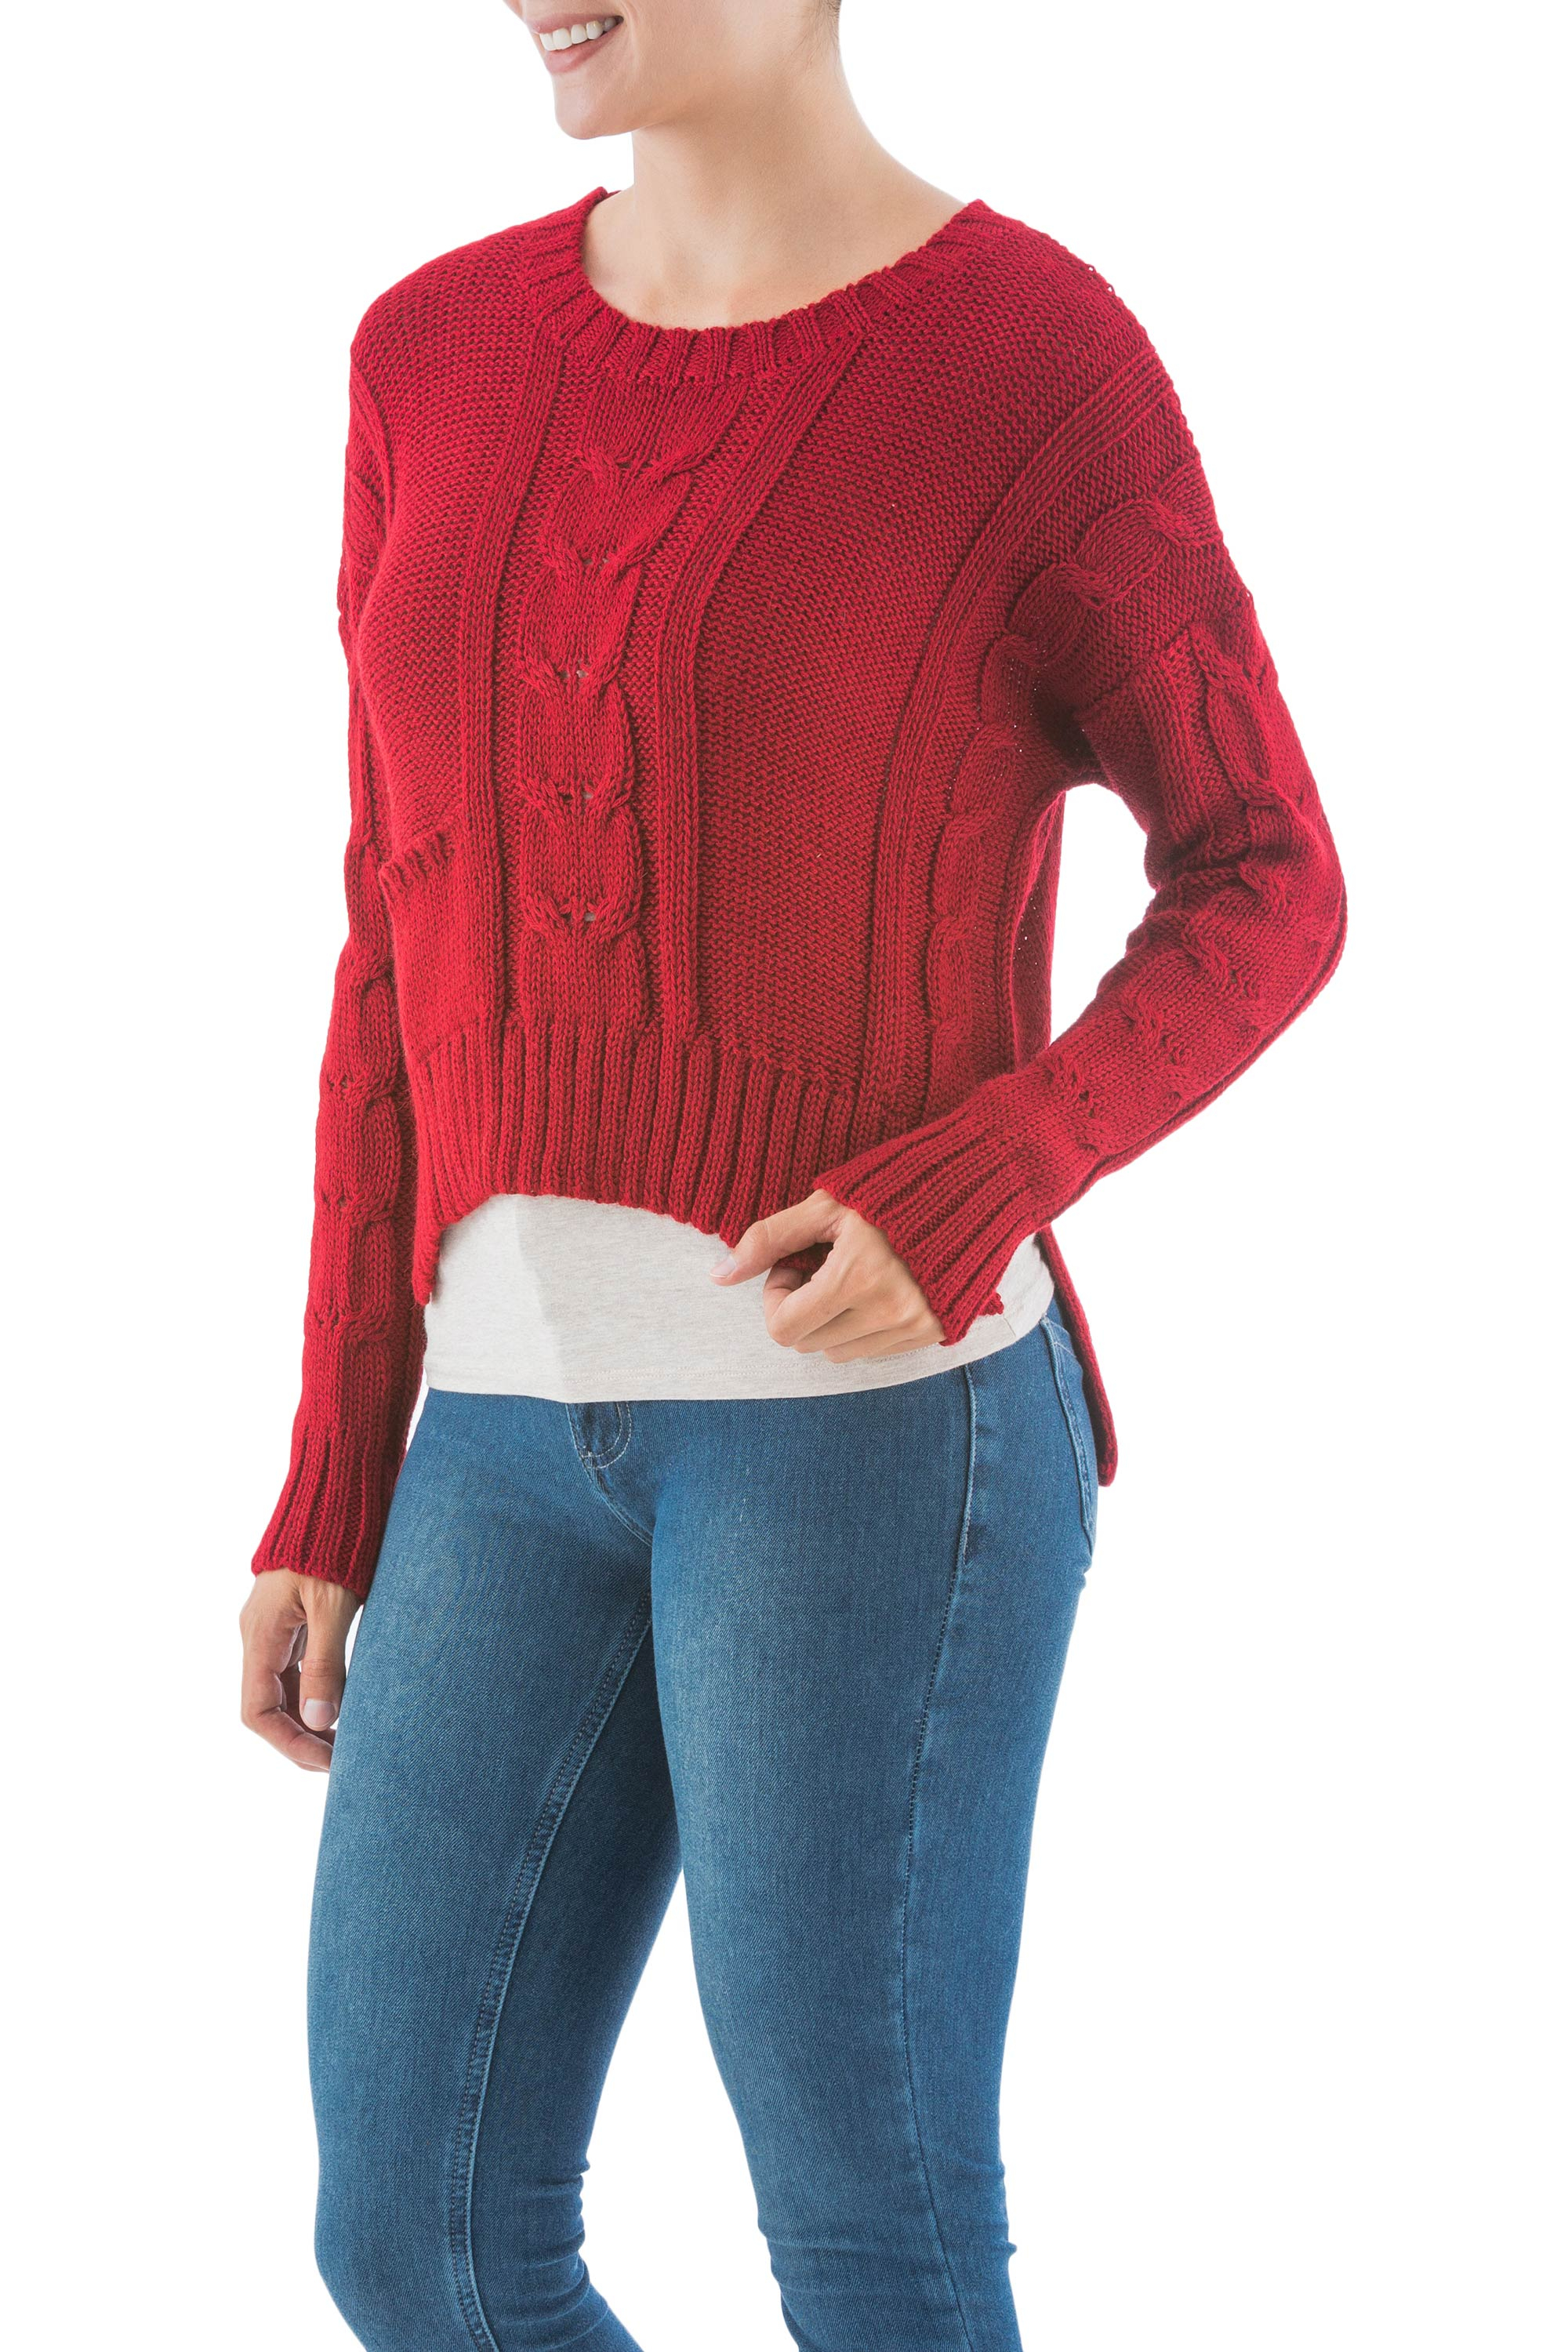 Red Alpaca Blend Sweater - Scarlet Belle | NOVICA